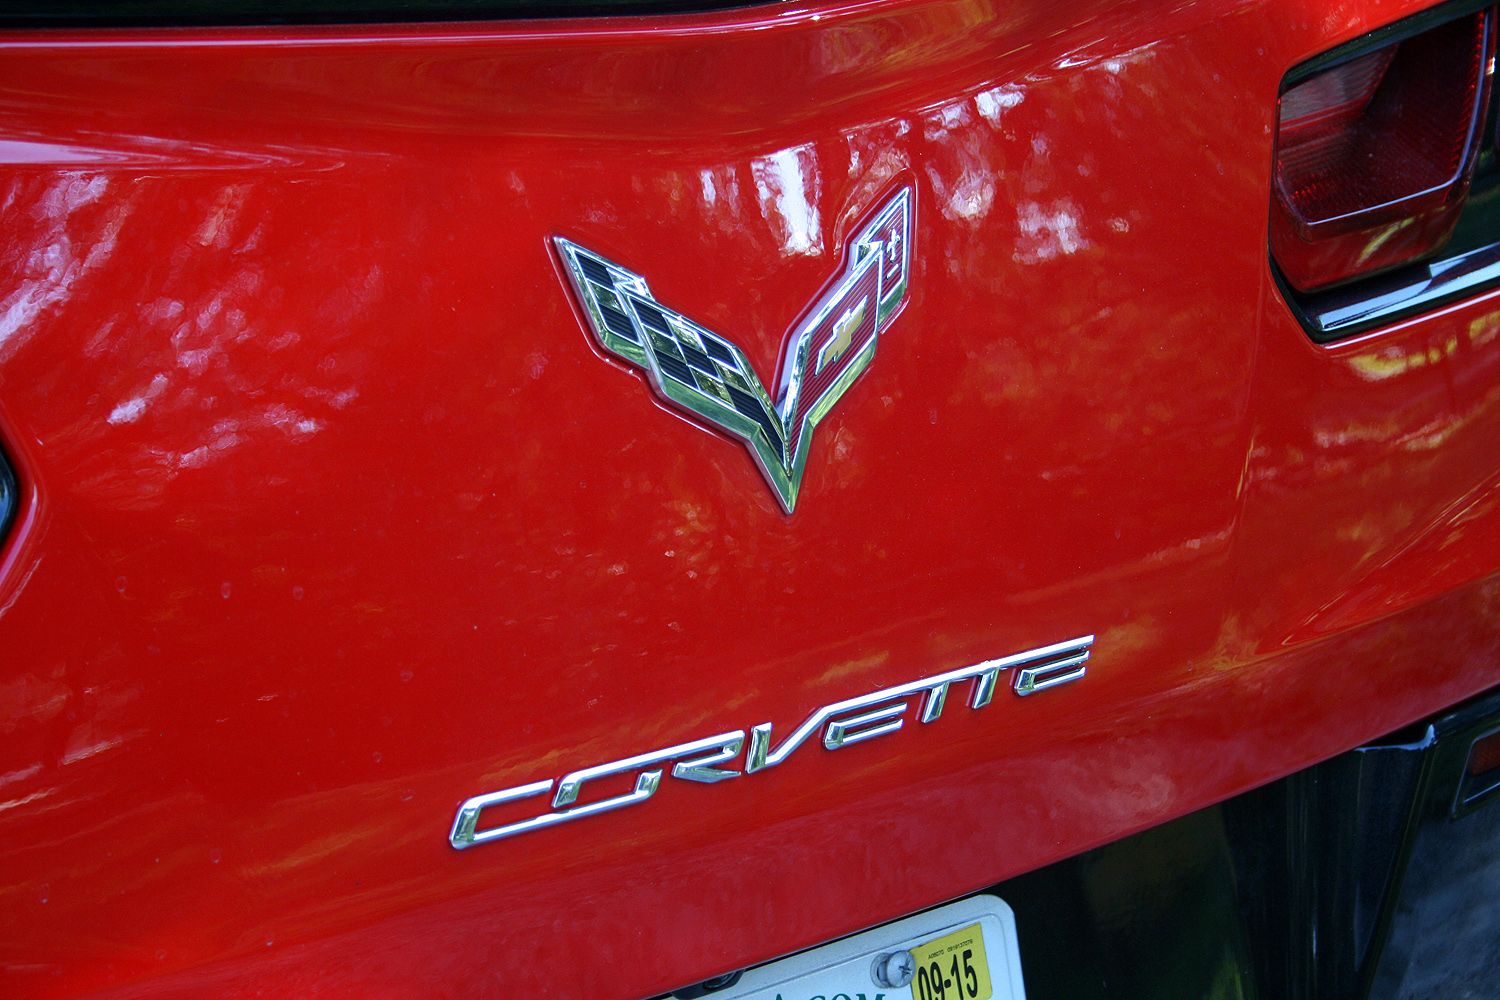 2016 Chevrolet Corvette Convertible - Driven